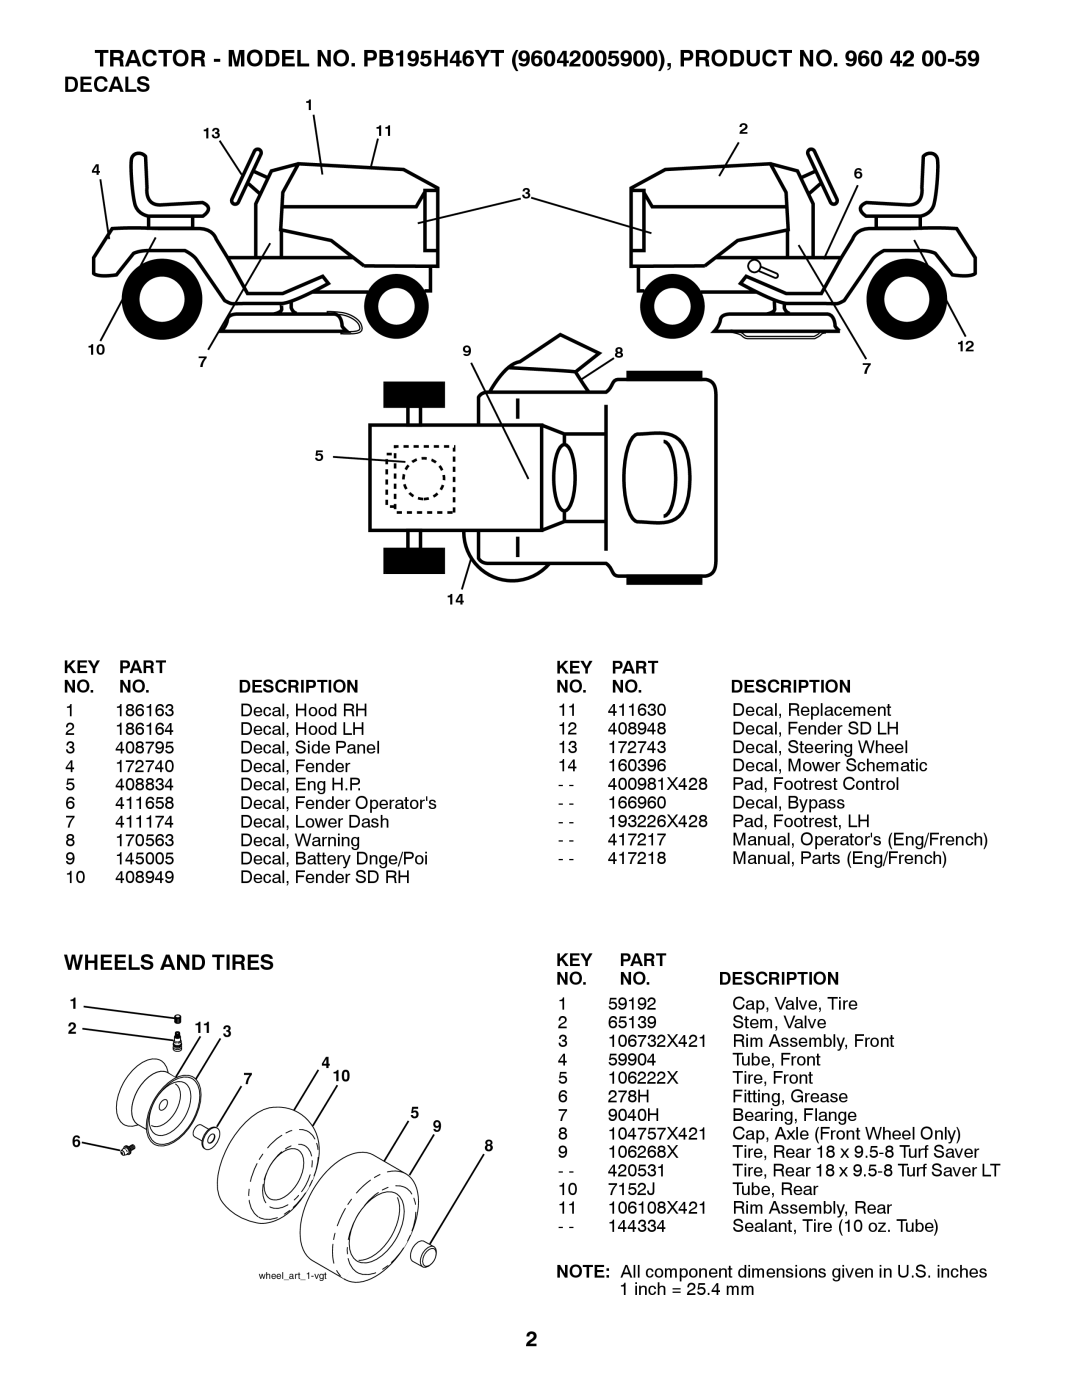 Poulan manual TRACTOR - MODEL NO. PB195H46YT 96042005900, PRODUCT NO. 960, Decals, Wheels And Tires, Part, Description 